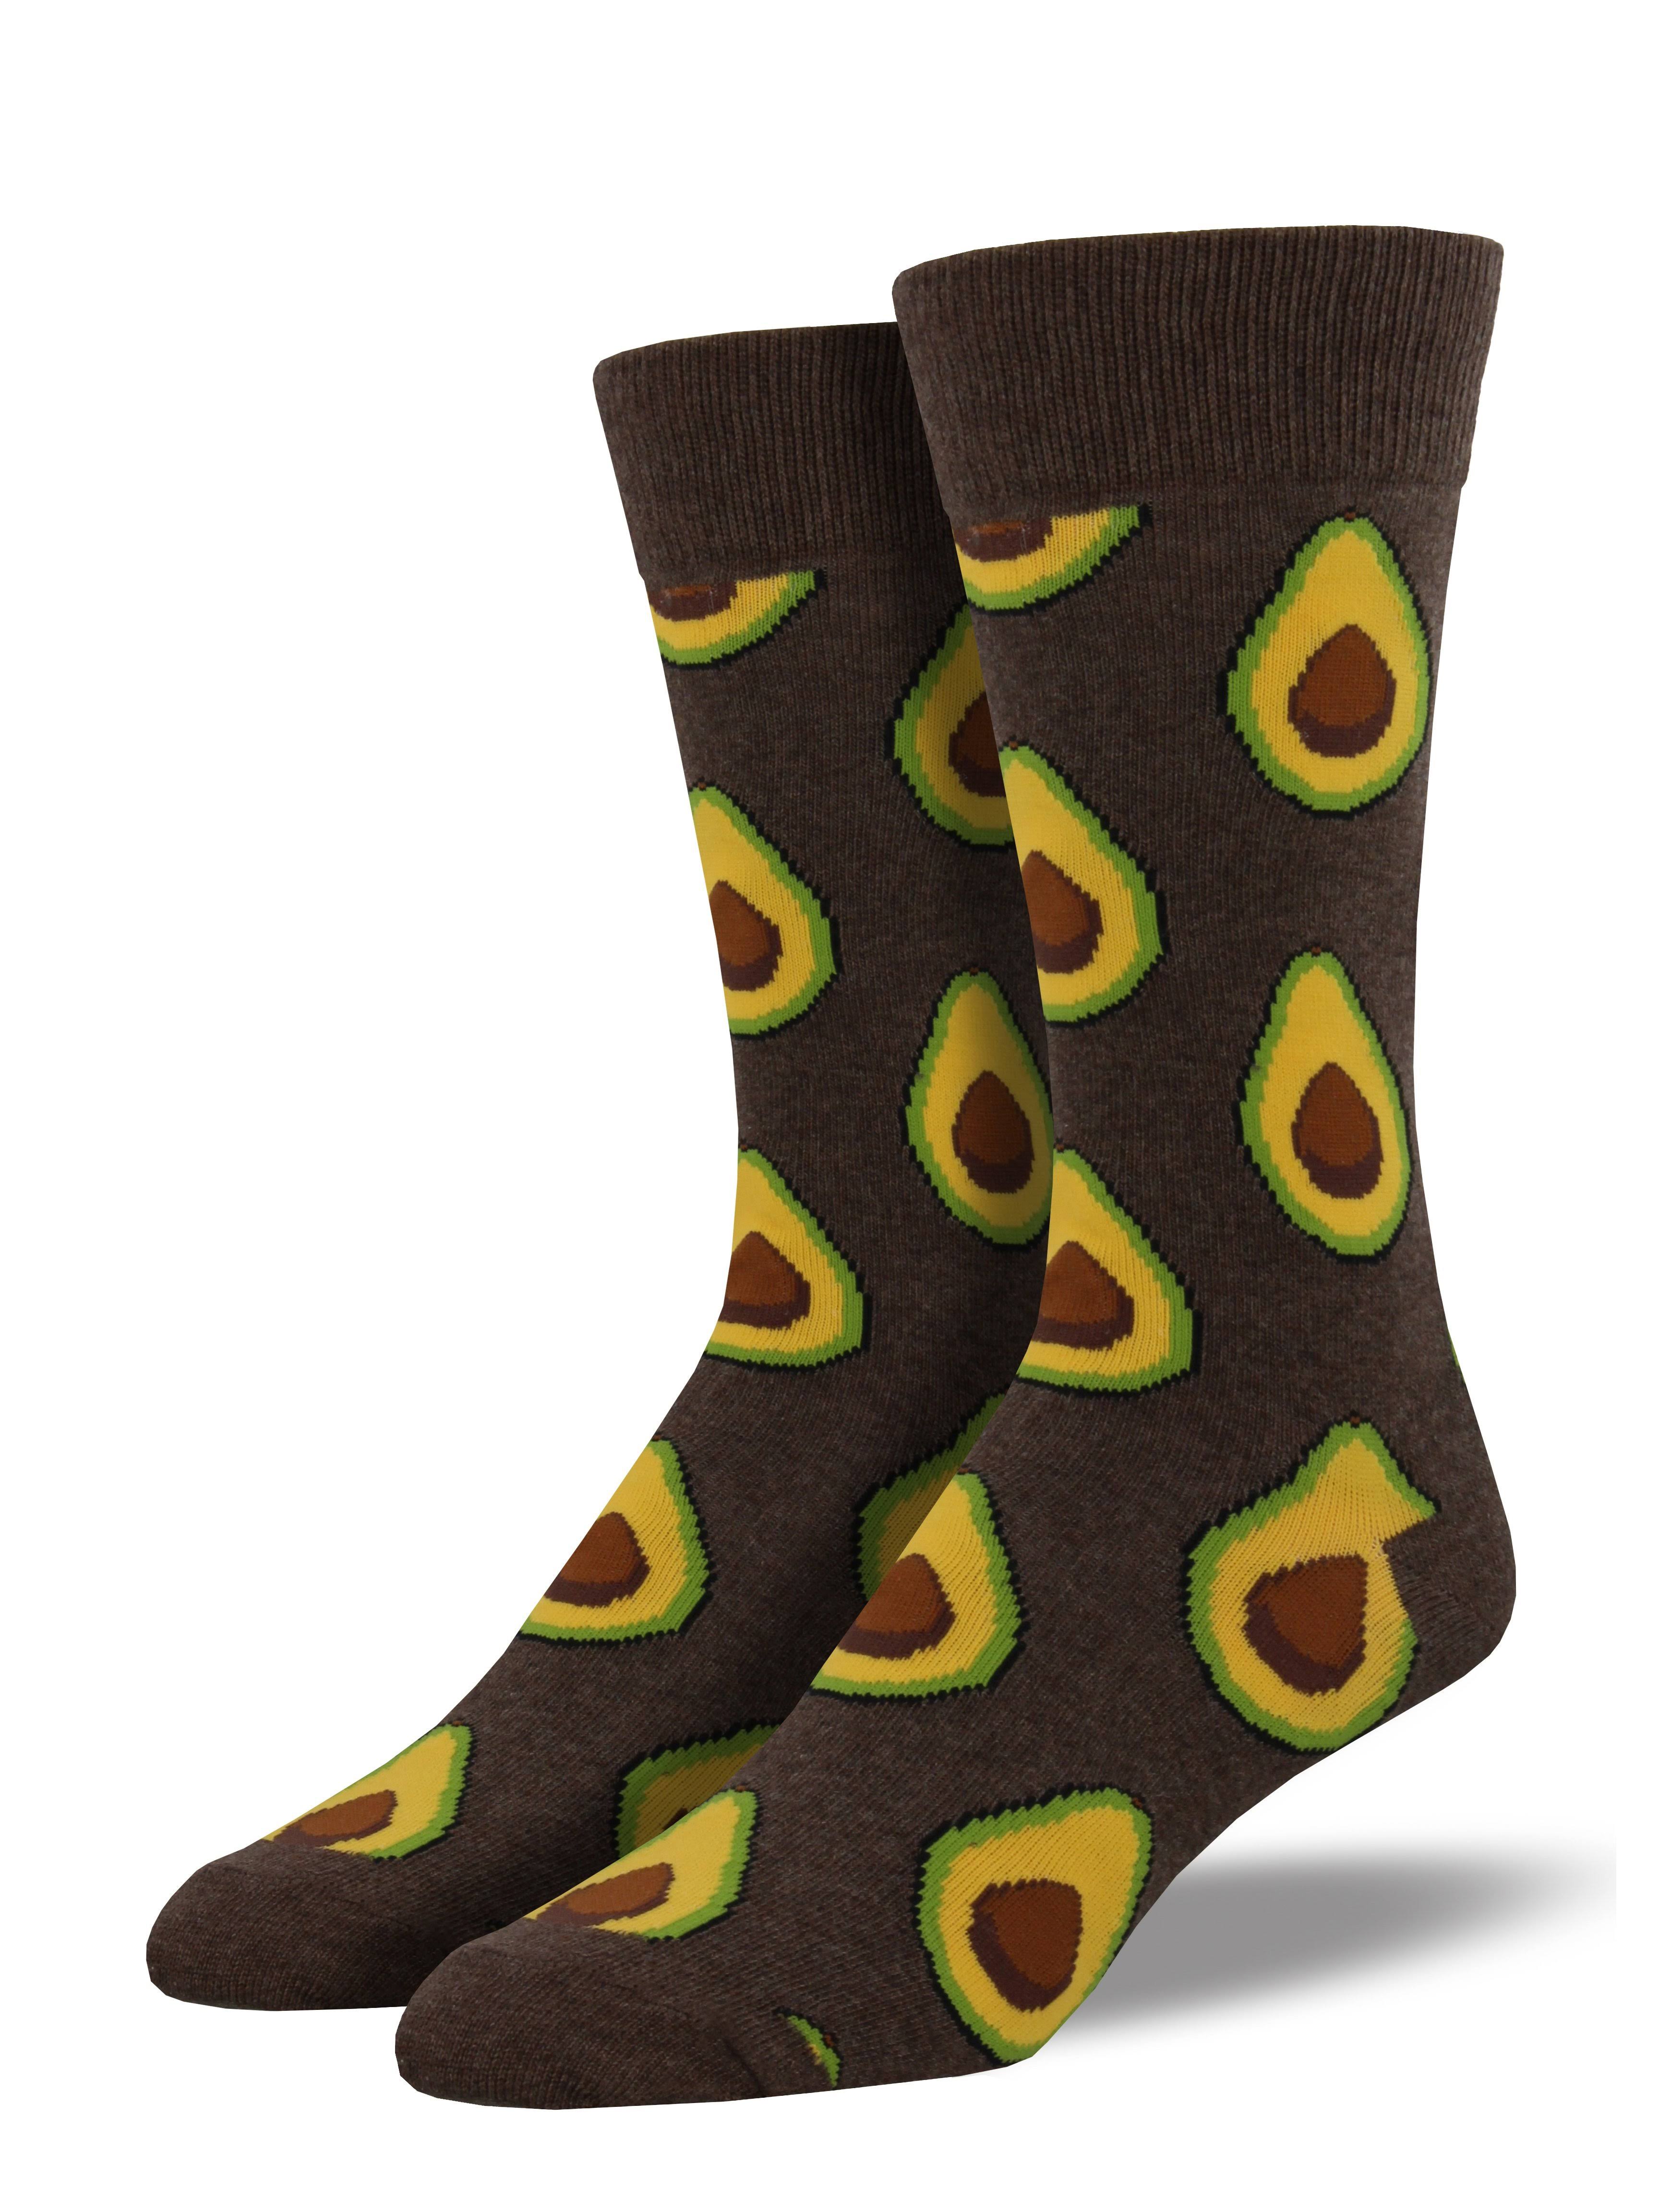 Socksmith Mens Crew Socks - Avocado, Heather Brown